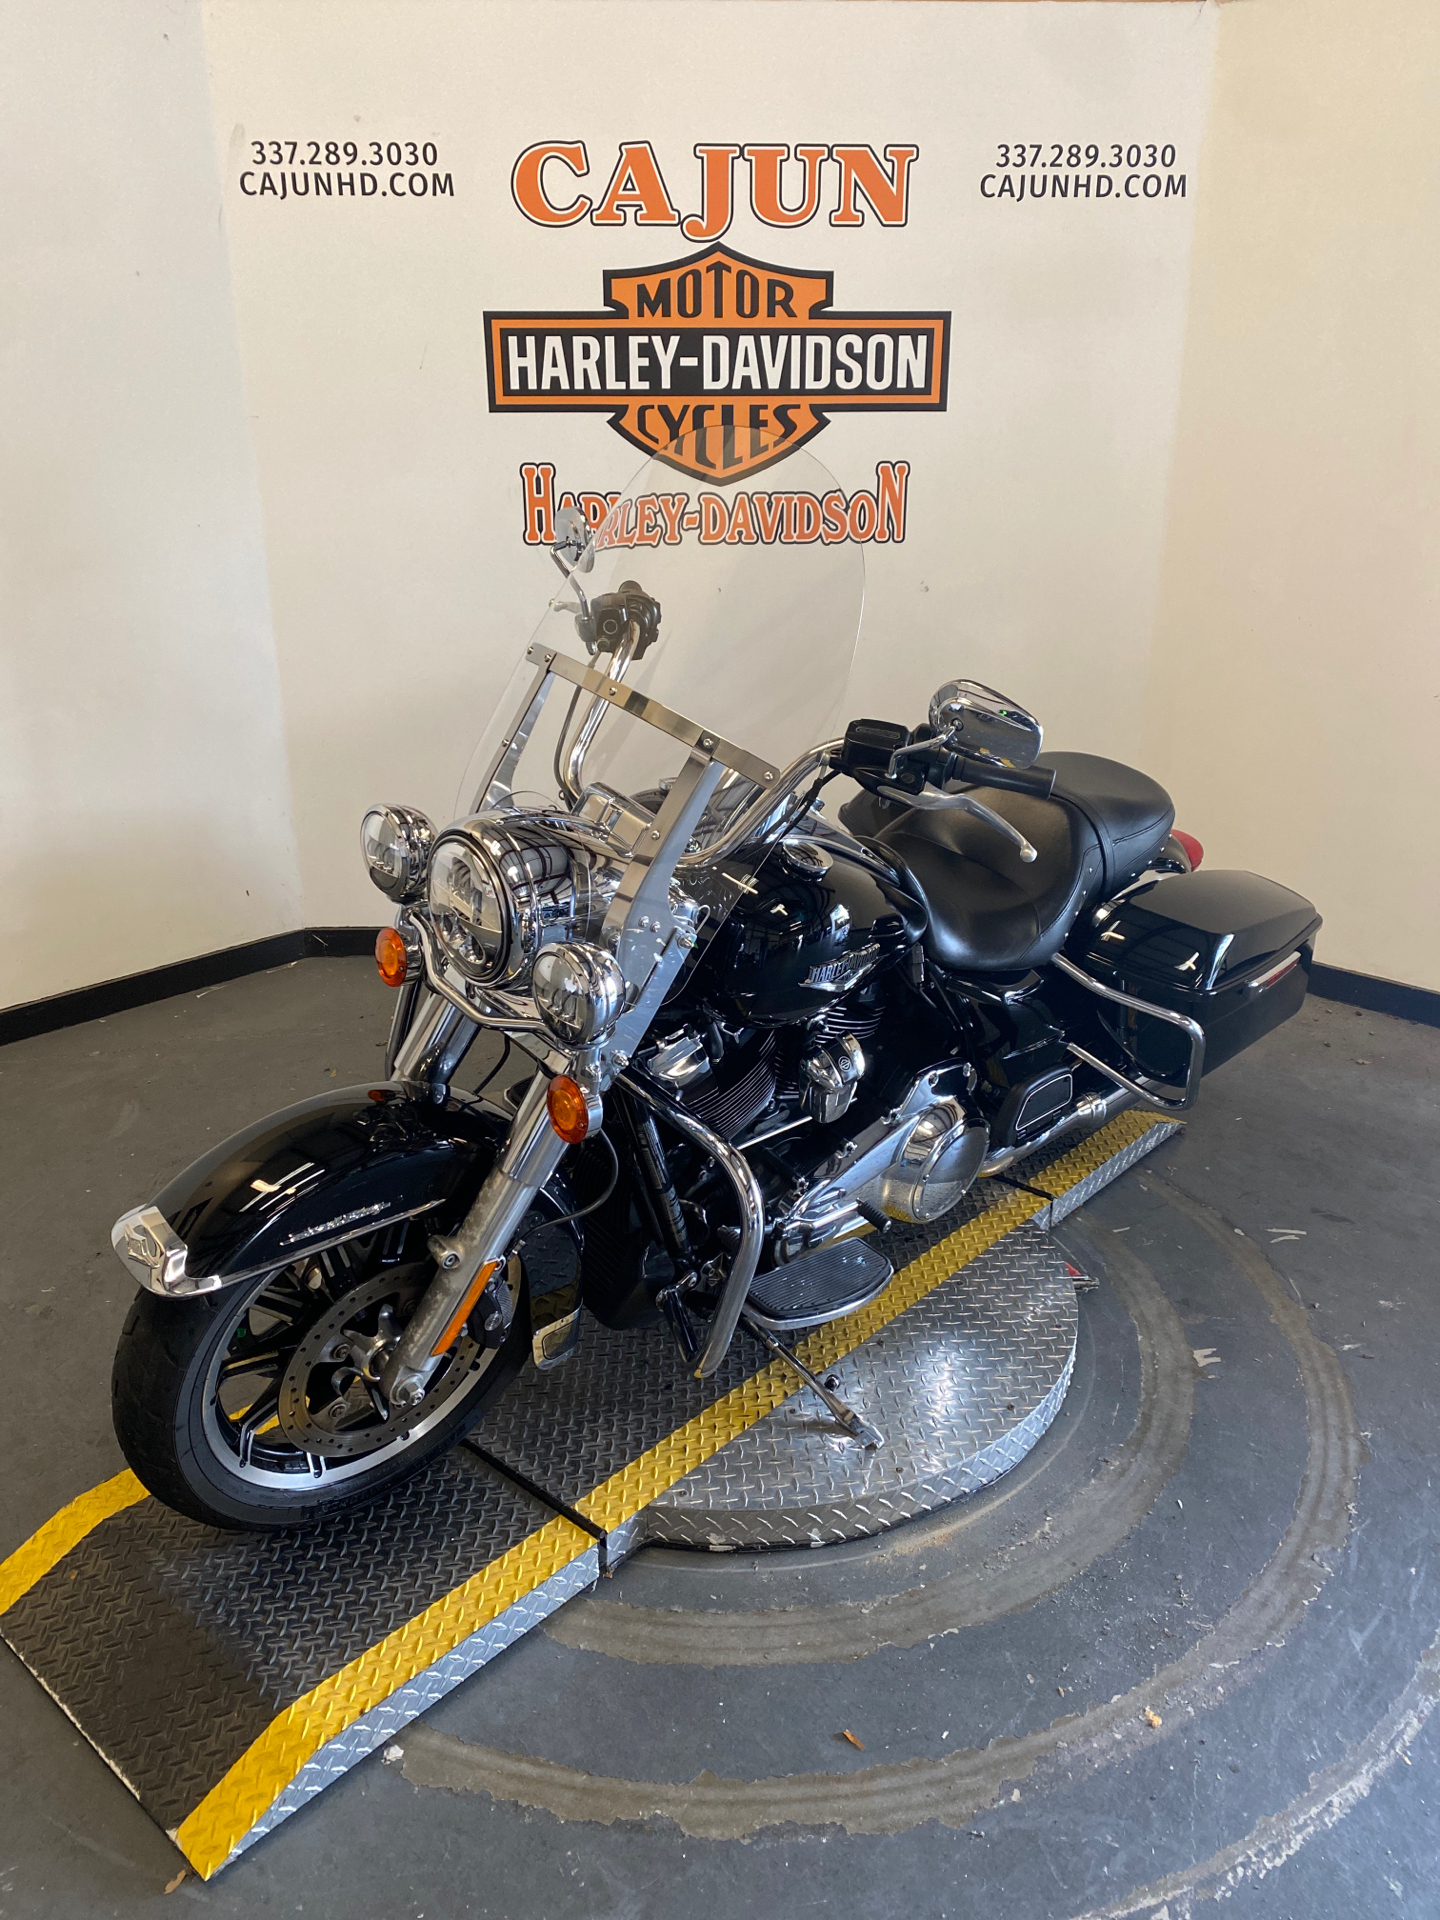 2019 Harley-Davidson Road King® near me - Photo 4